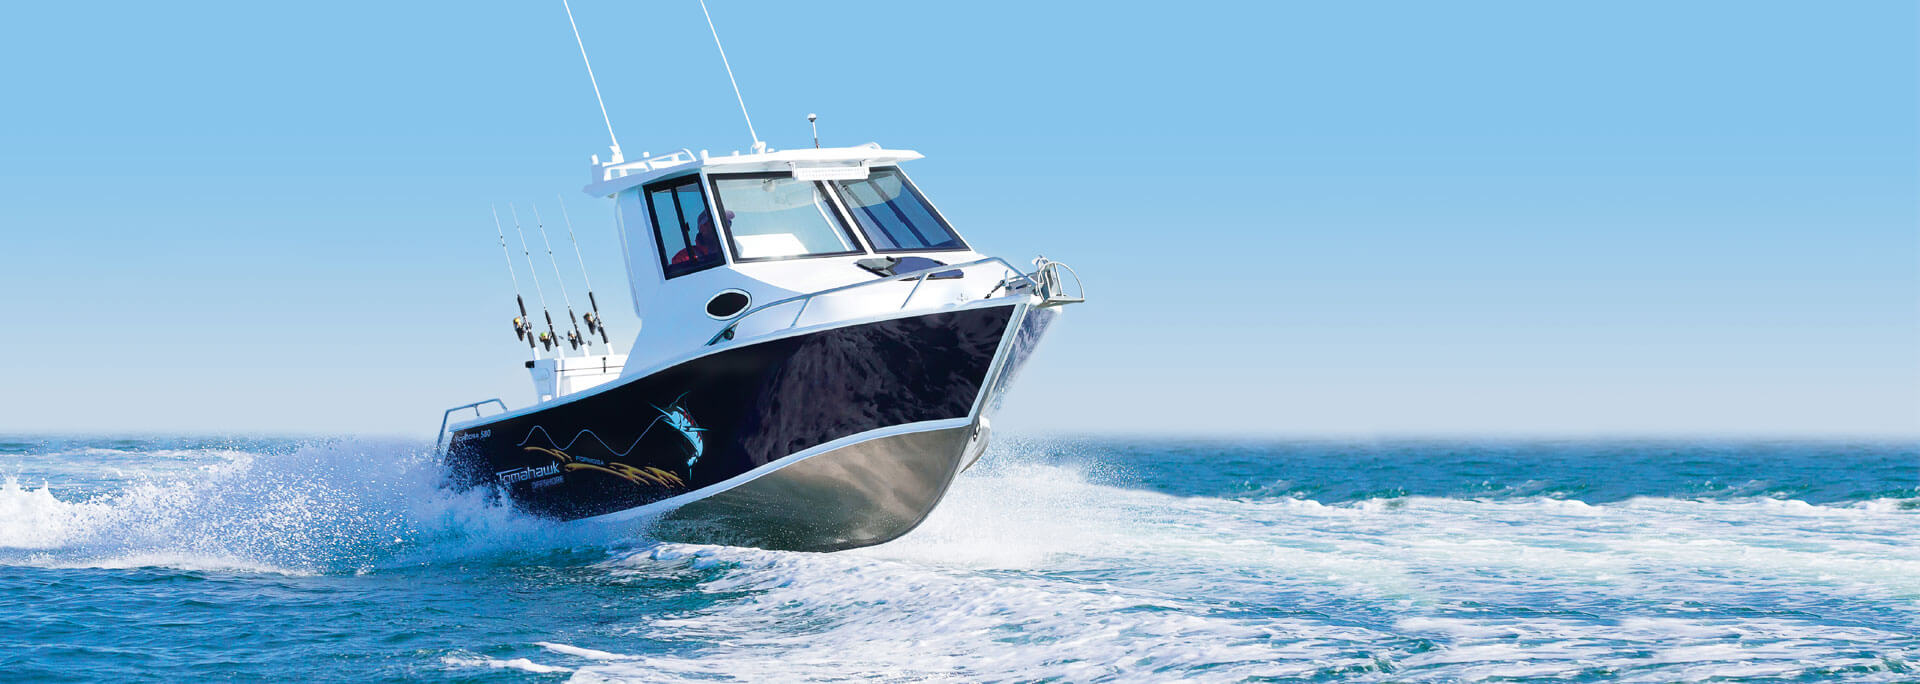 formosa marine australian owned aluminium plate boat